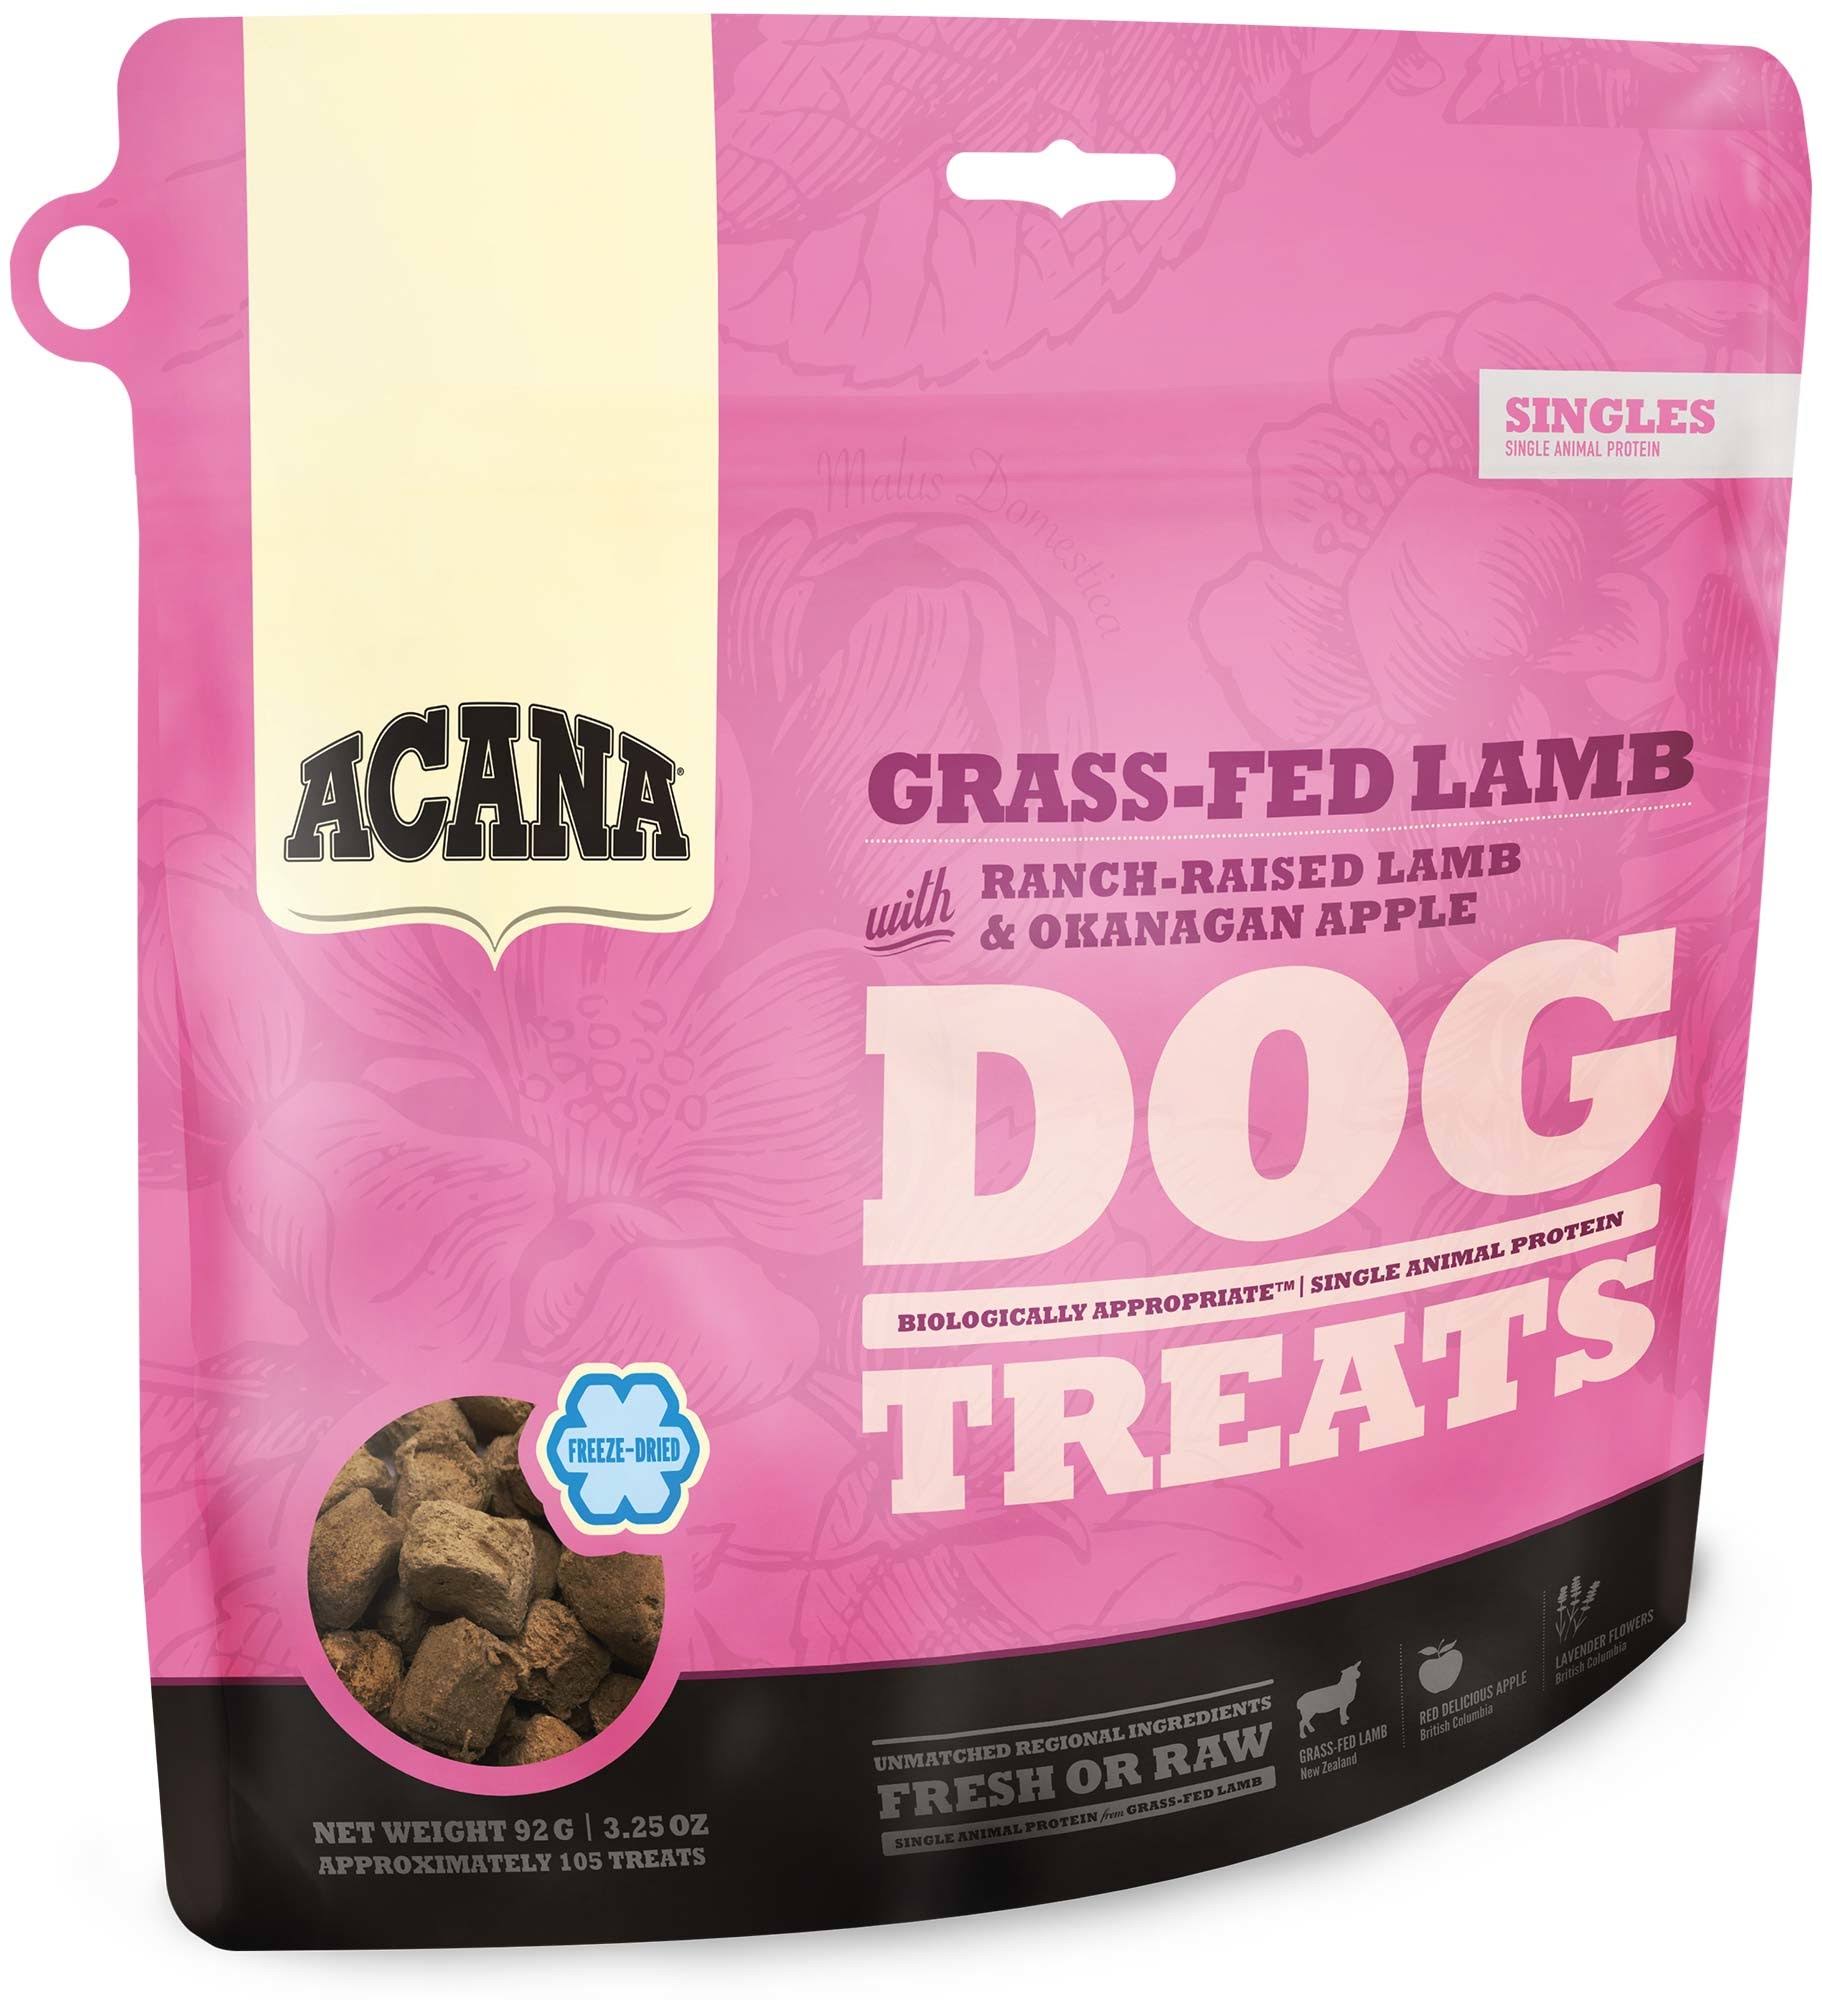 Acana Singles Freeze Dried Treats Dog - Grass-Fed Lamb - 92g